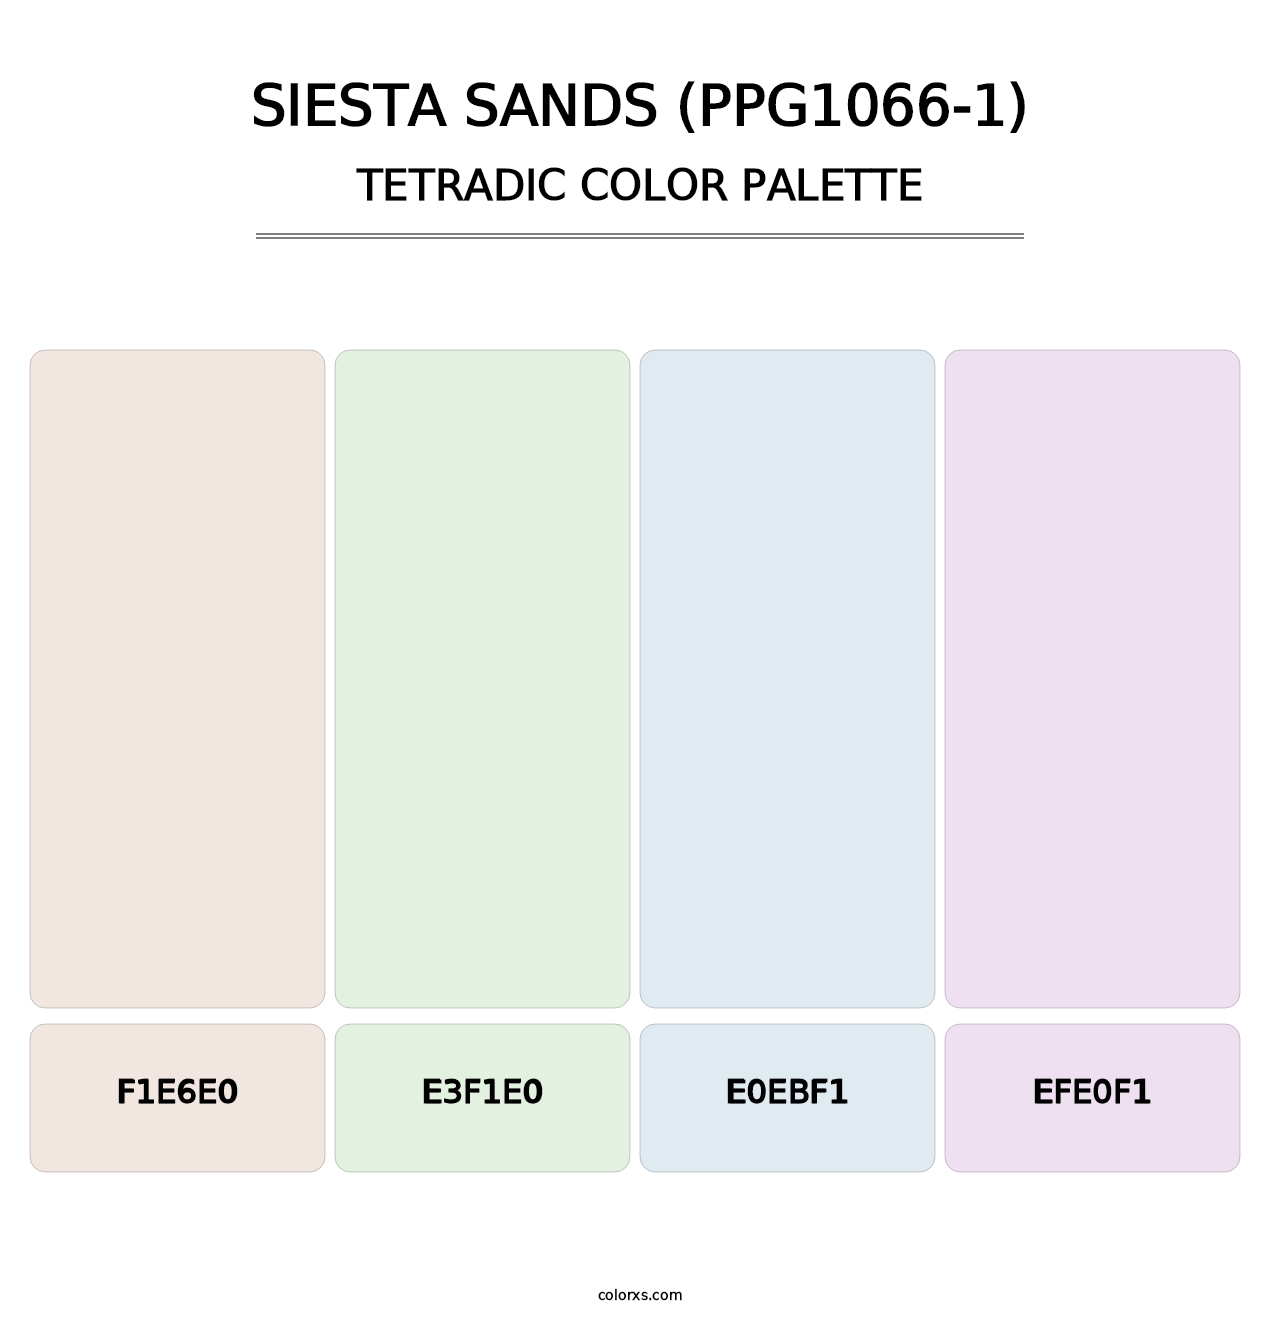 Siesta Sands (PPG1066-1) - Tetradic Color Palette